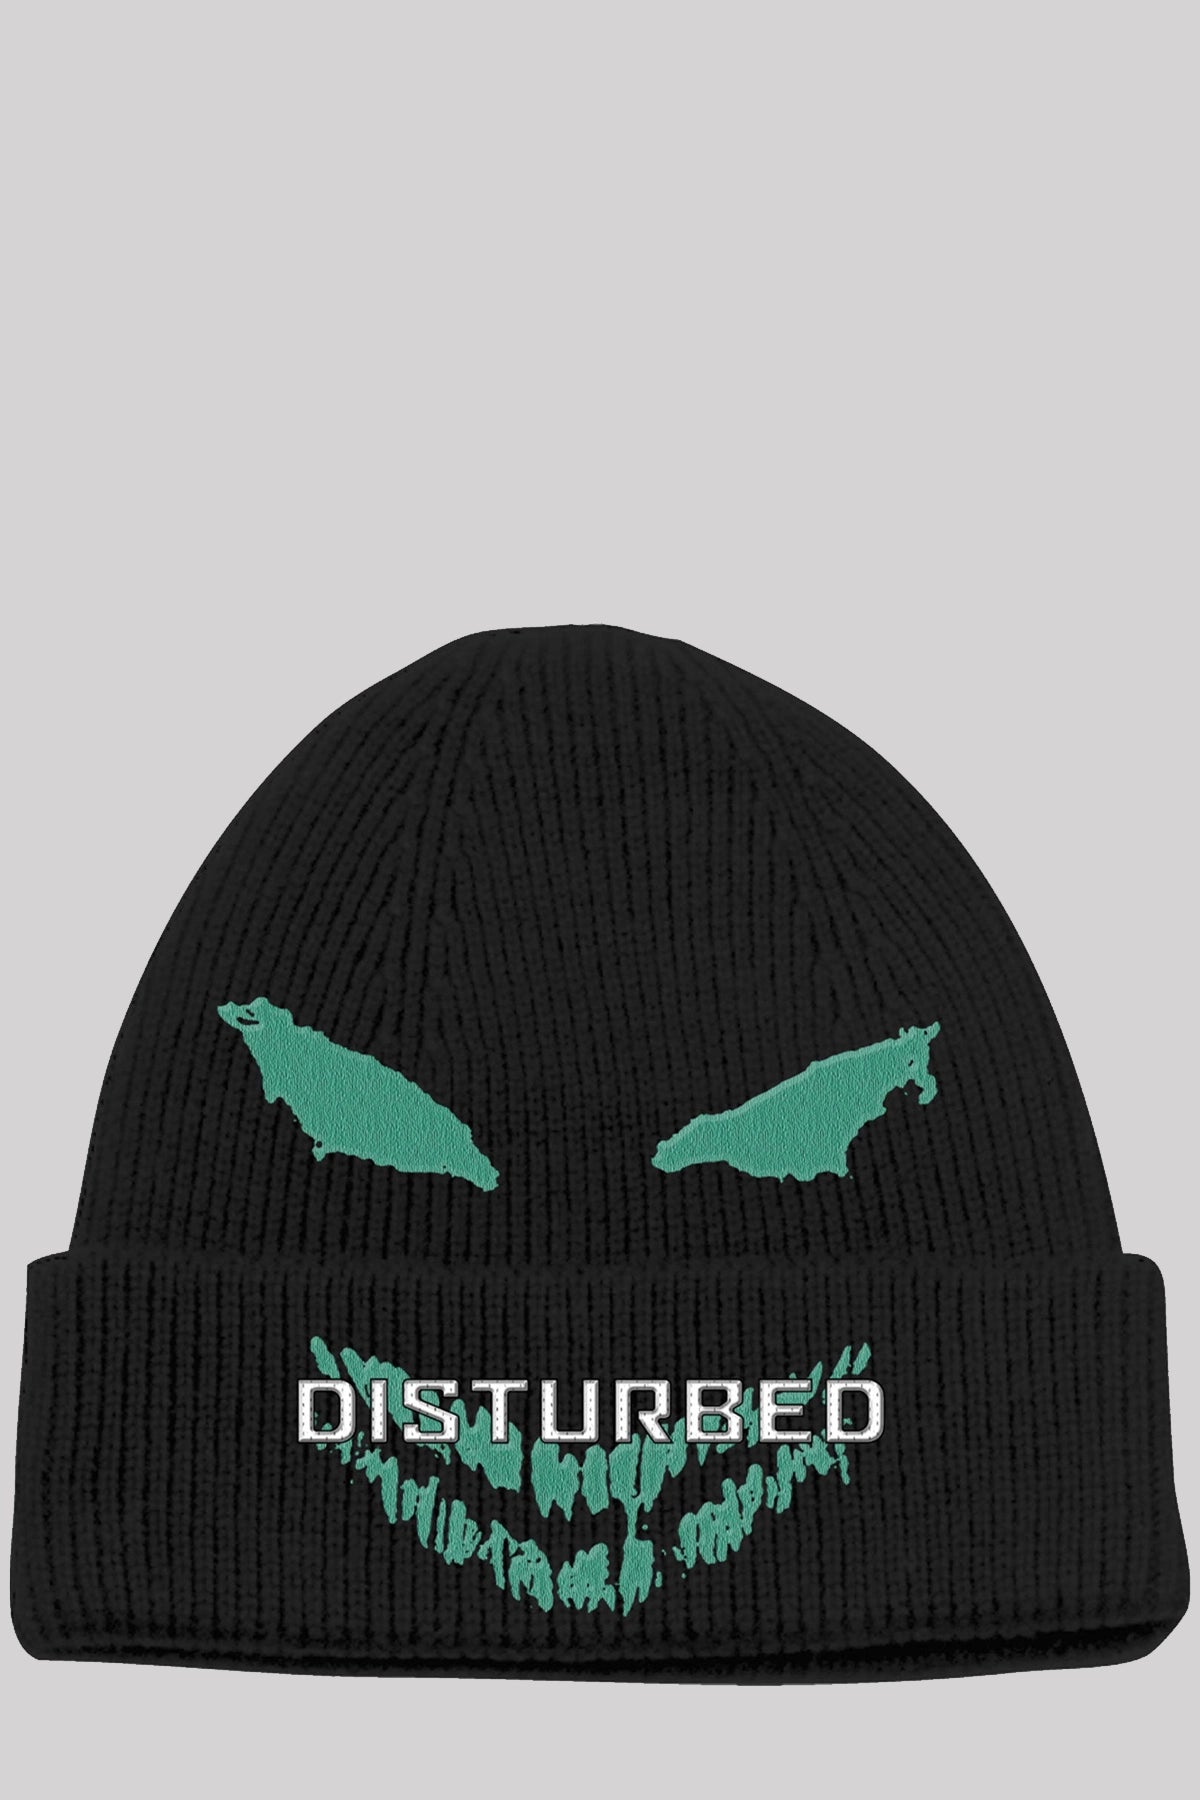 Disturbed Unisex Beanie Hat: Green Face Official Band Merch